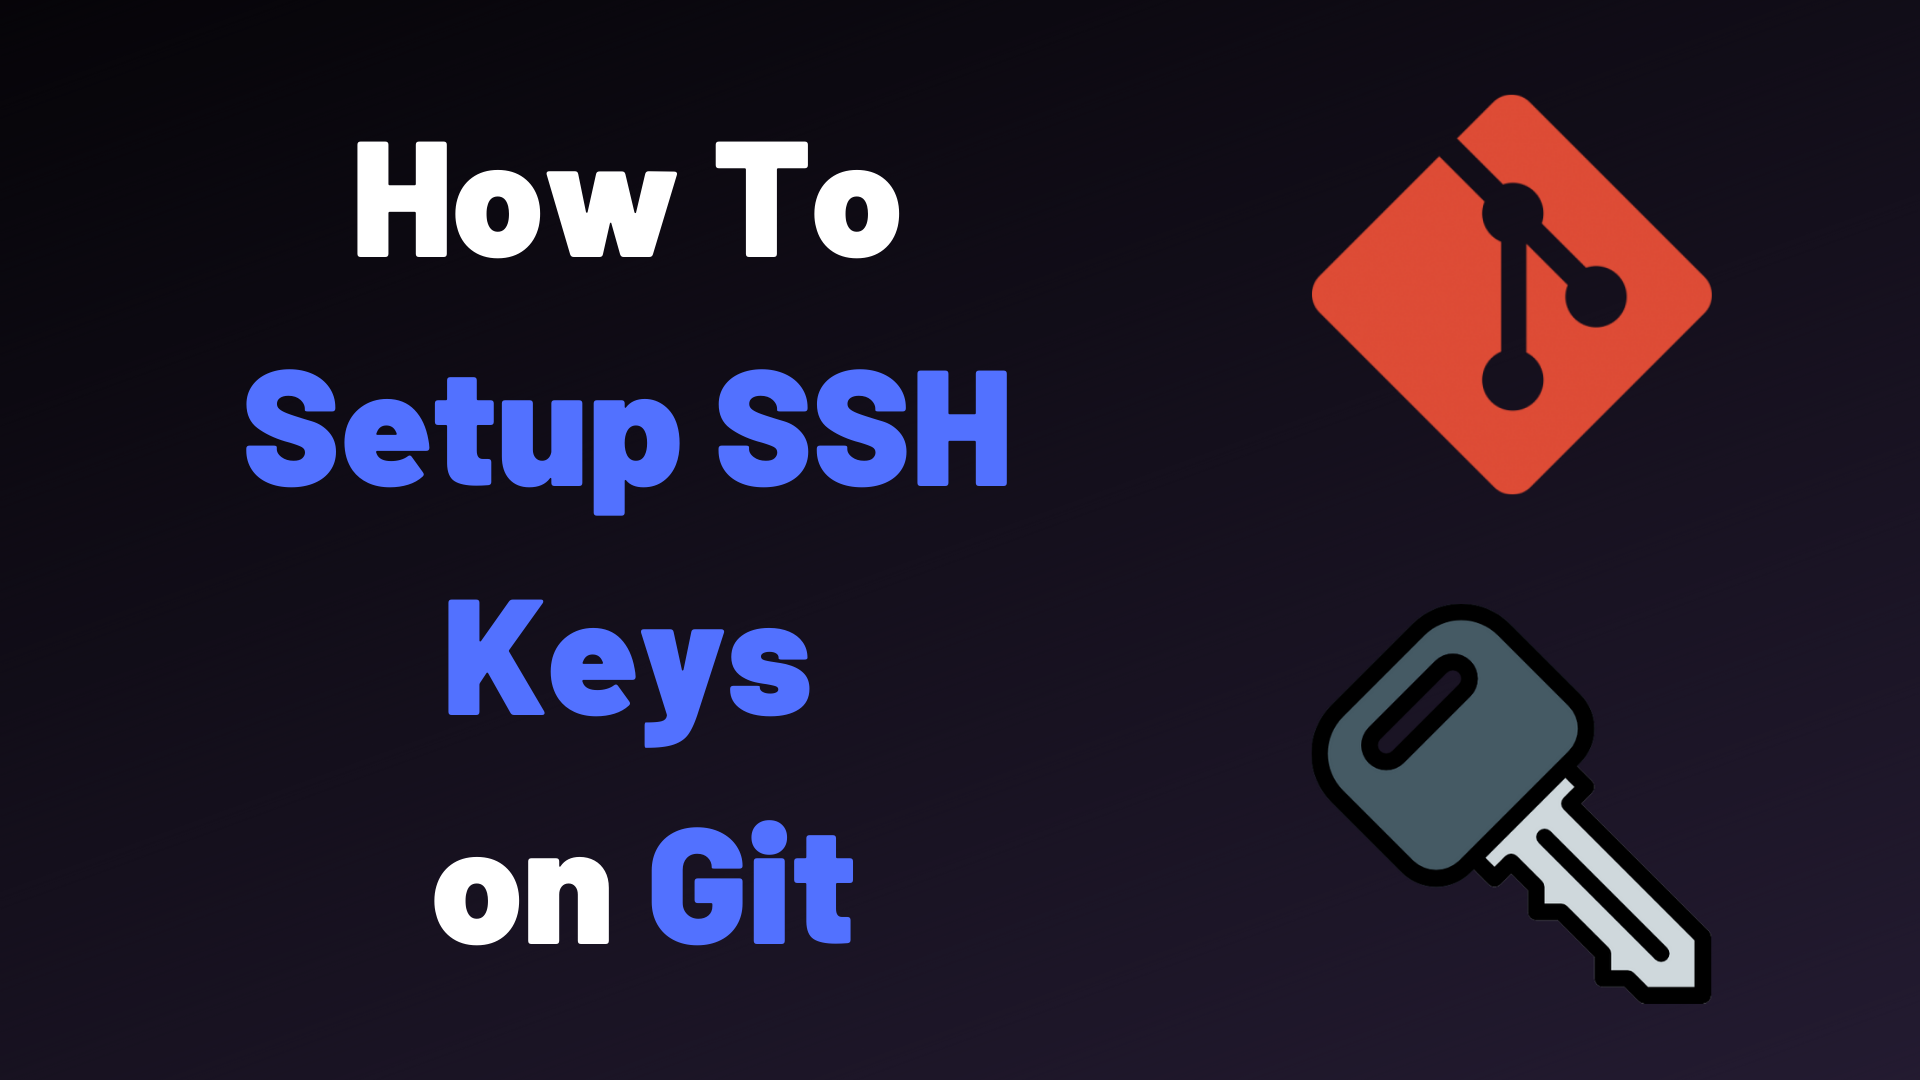 How To Generate Git SSH Keys